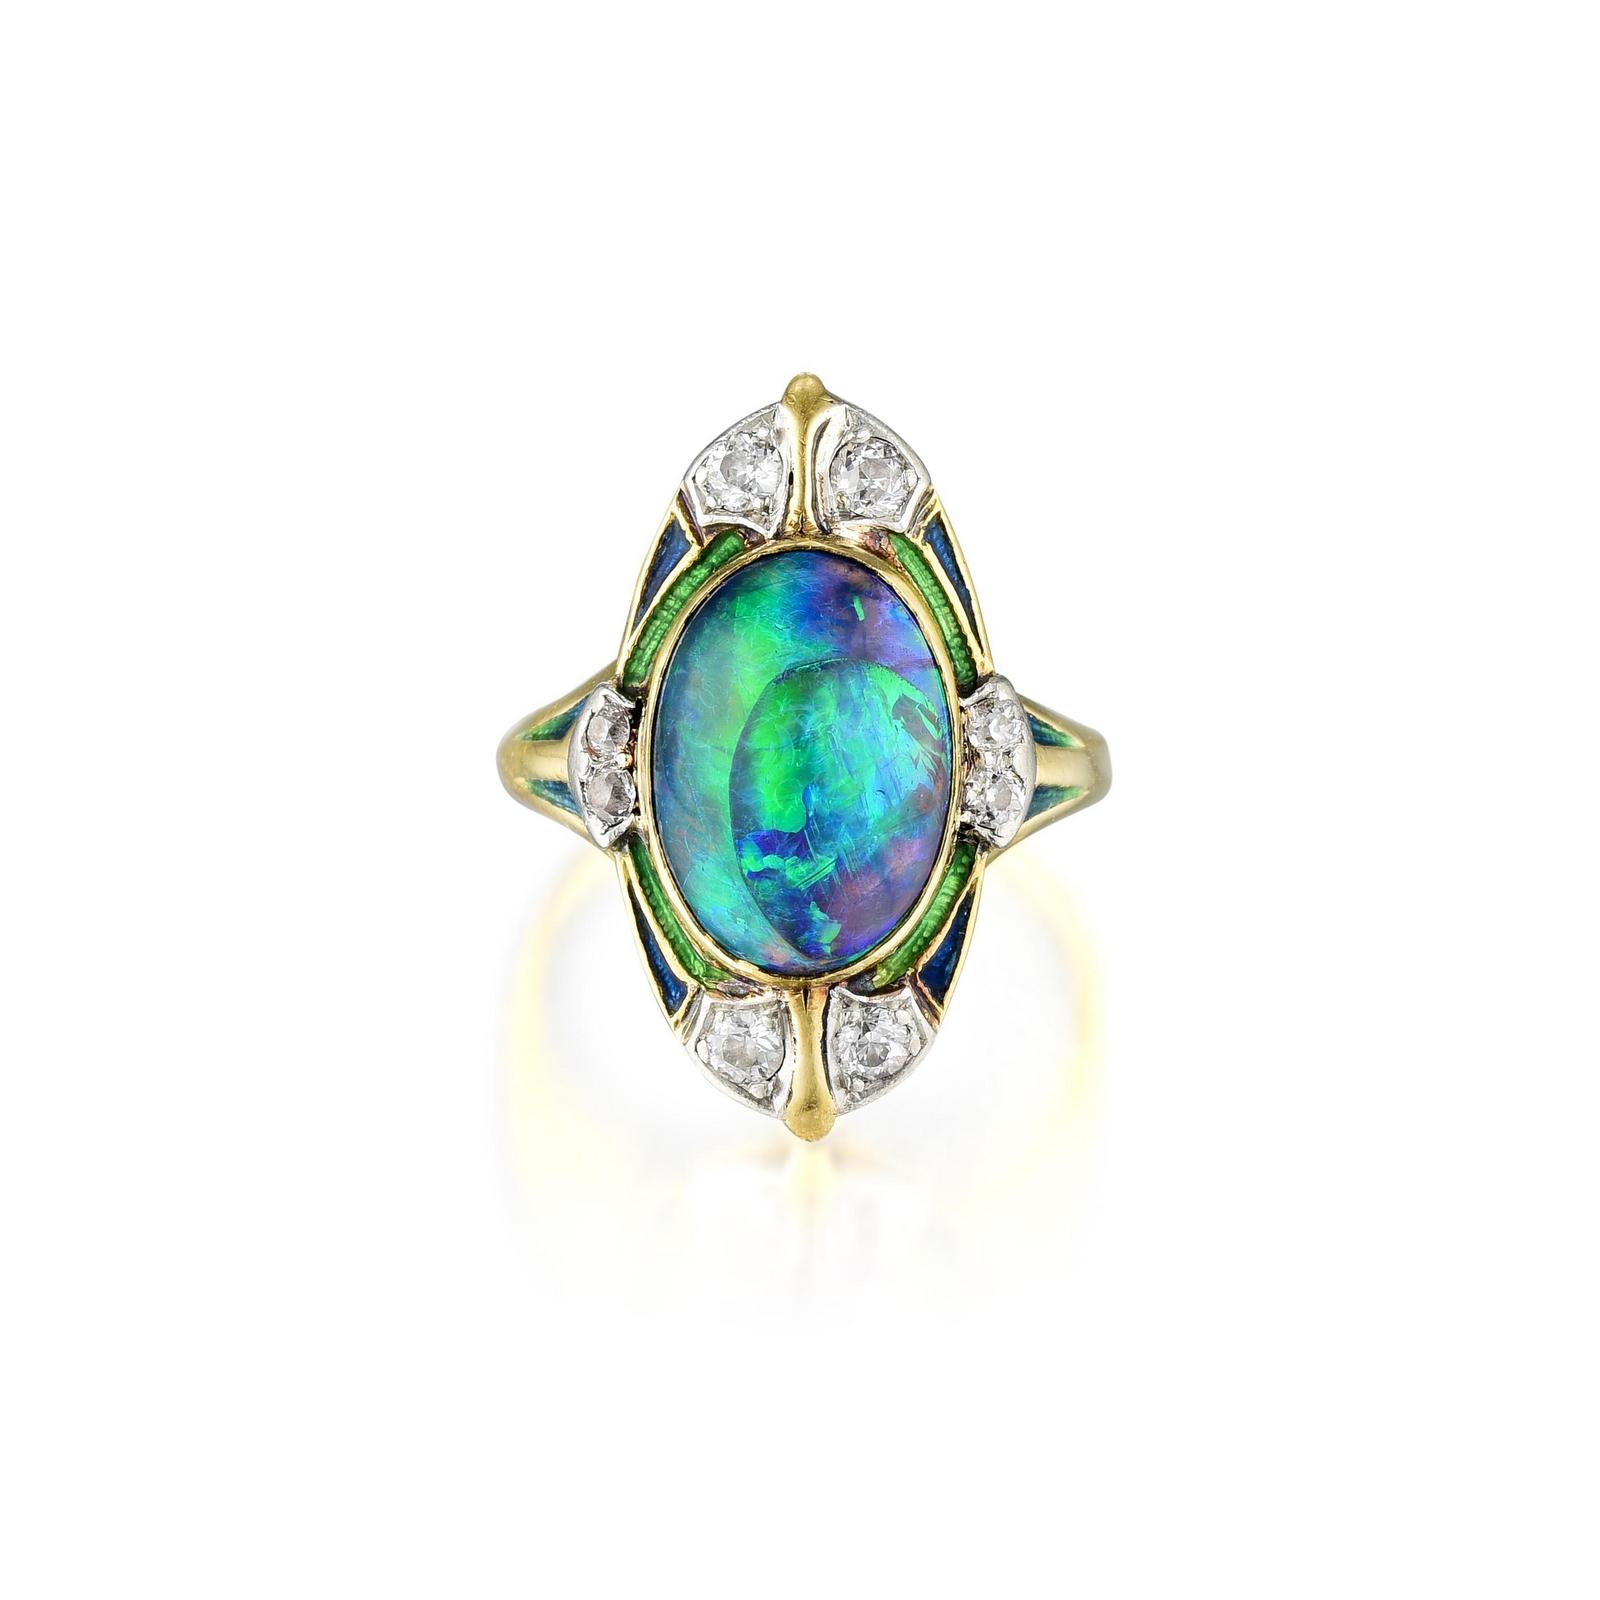 Louis Comfort Tiffany Art Nouveau Black Opal Diamond and Enamel